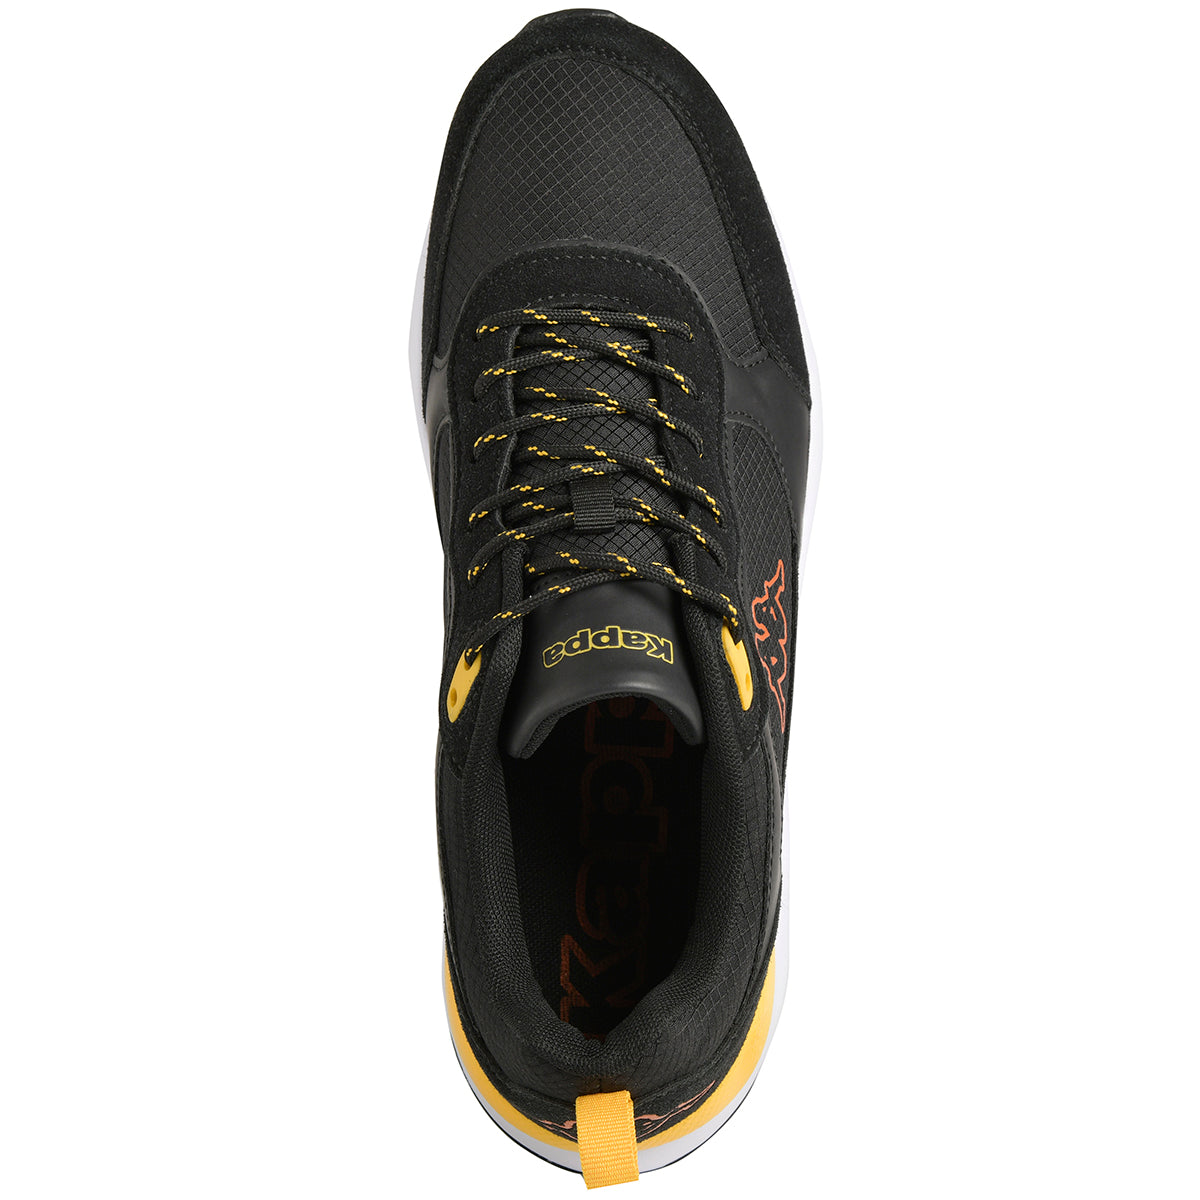 Sneakers Brady NY noir homme - Image 4